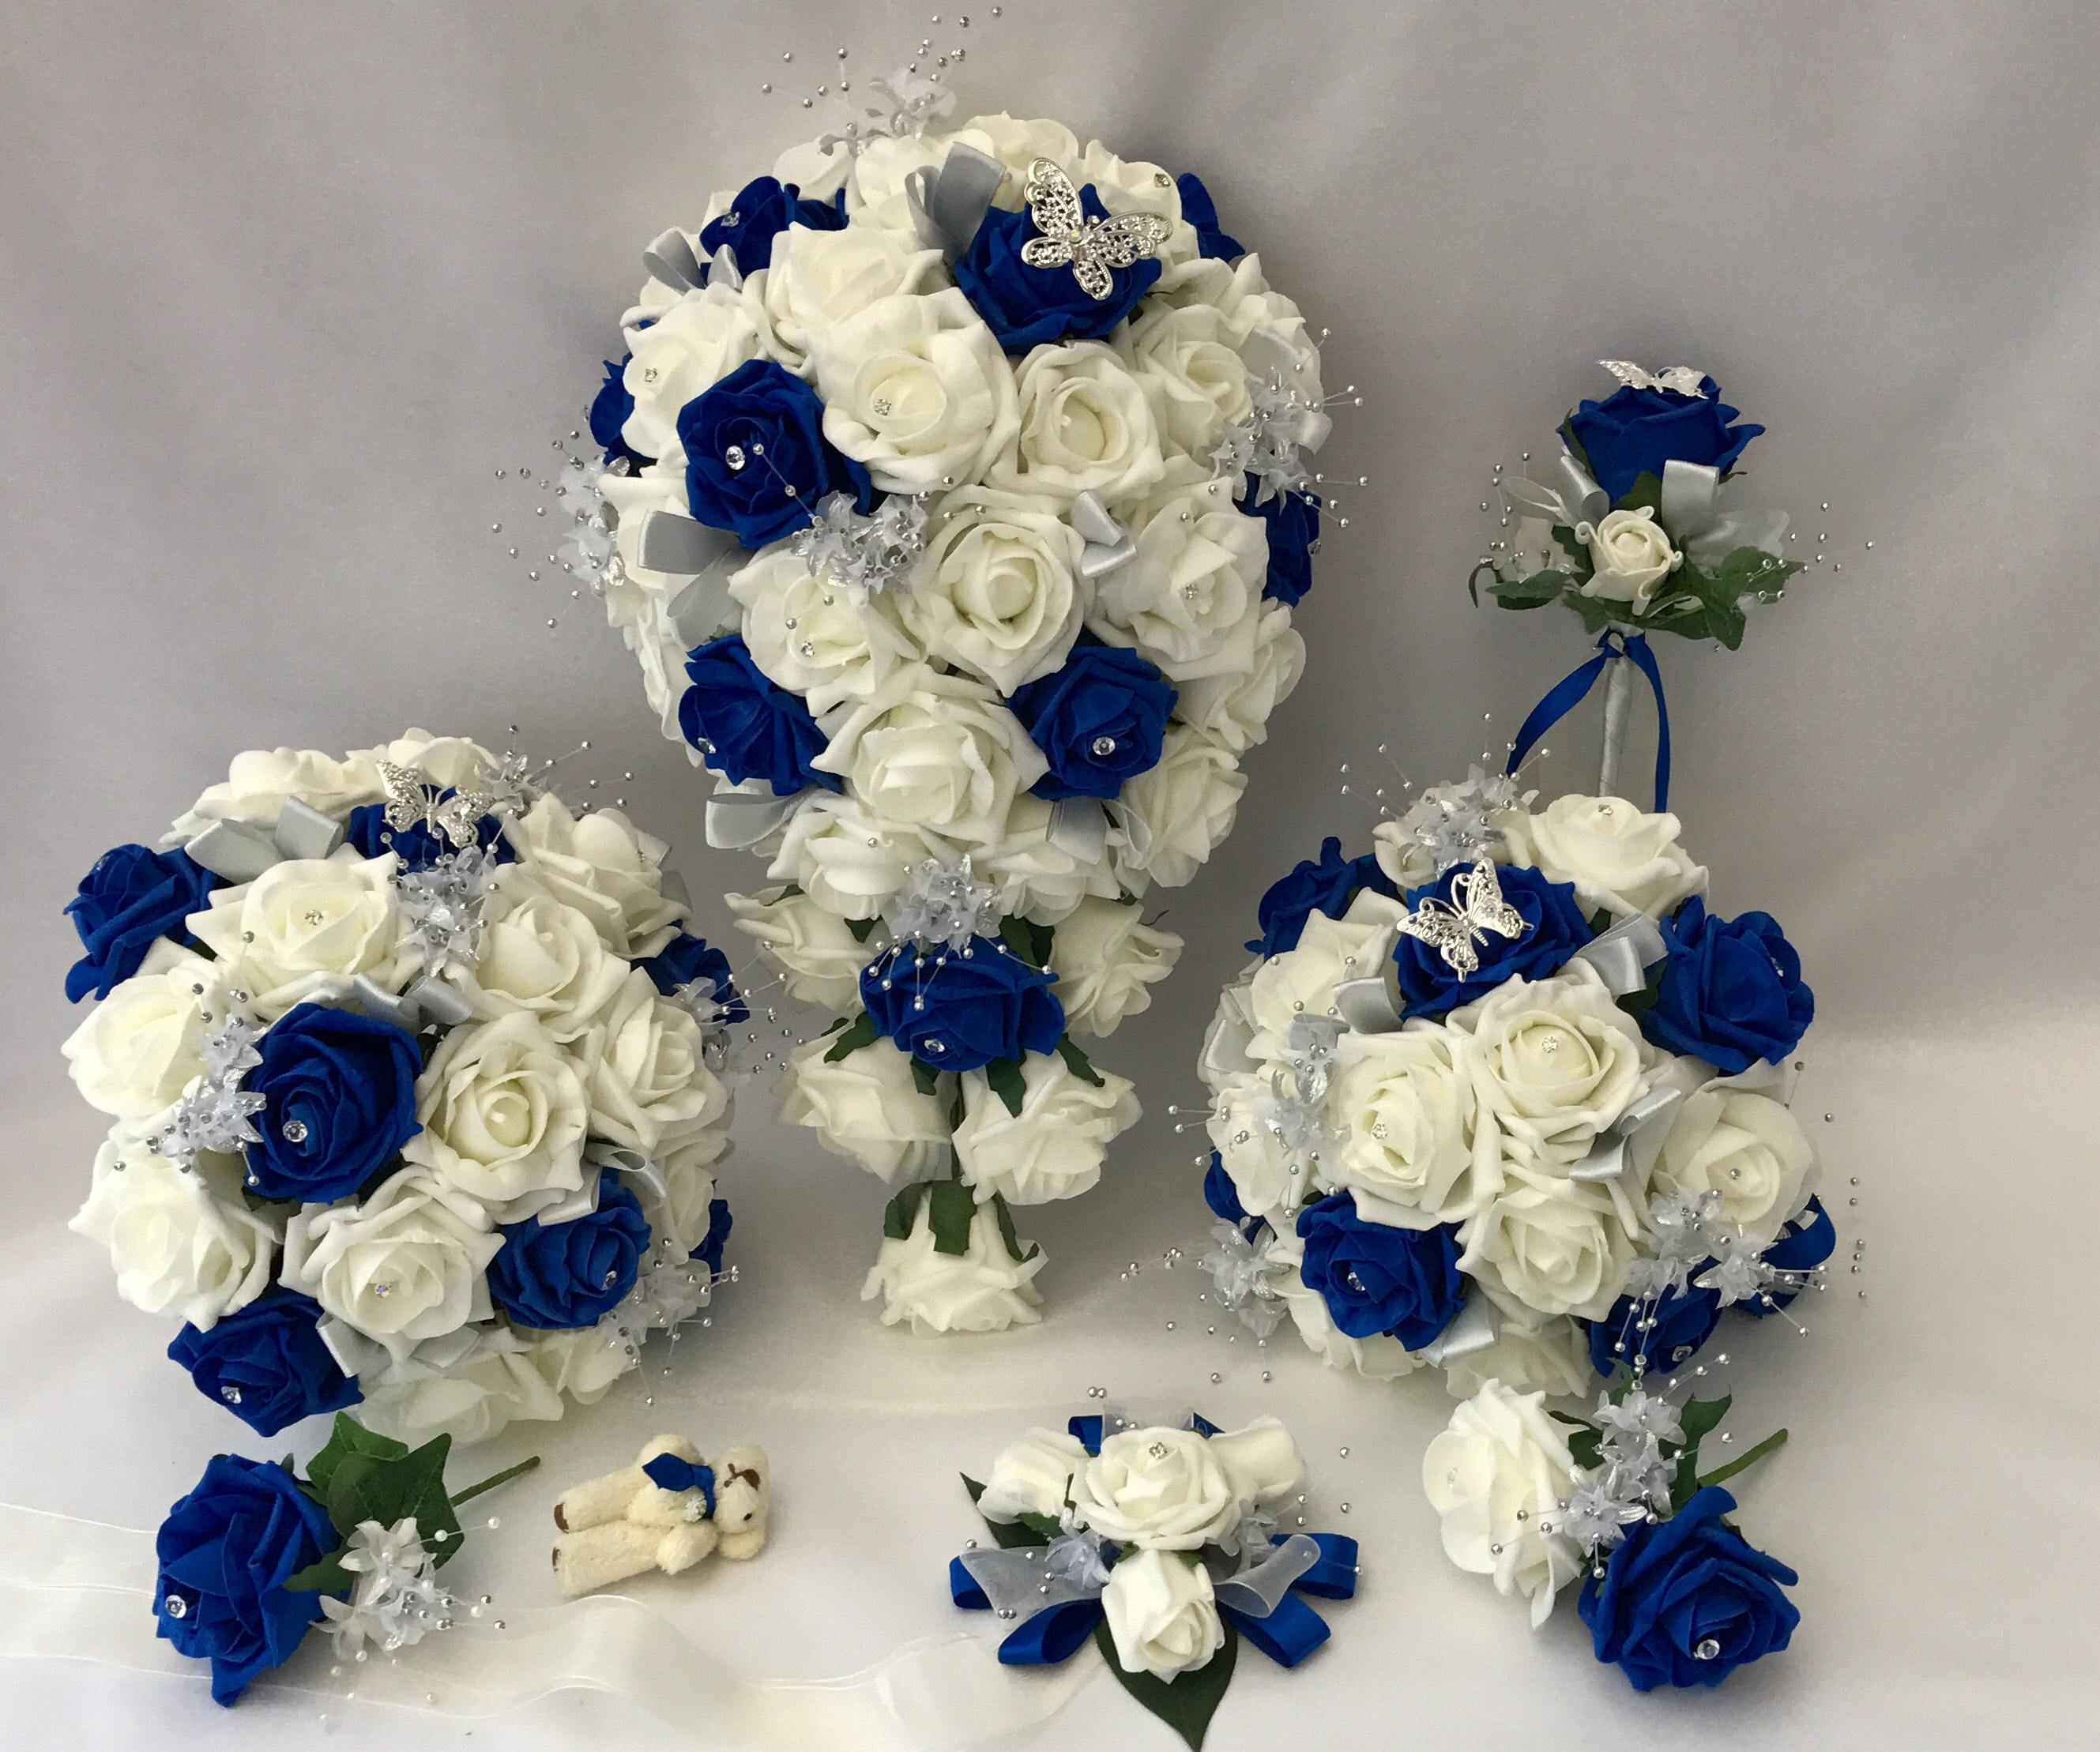 ARTIFICIAL FLOWERS ROYAL BLUE IVORY FOAM ROSE BRIDE CRYSTAL WEDDING BOUQUET 